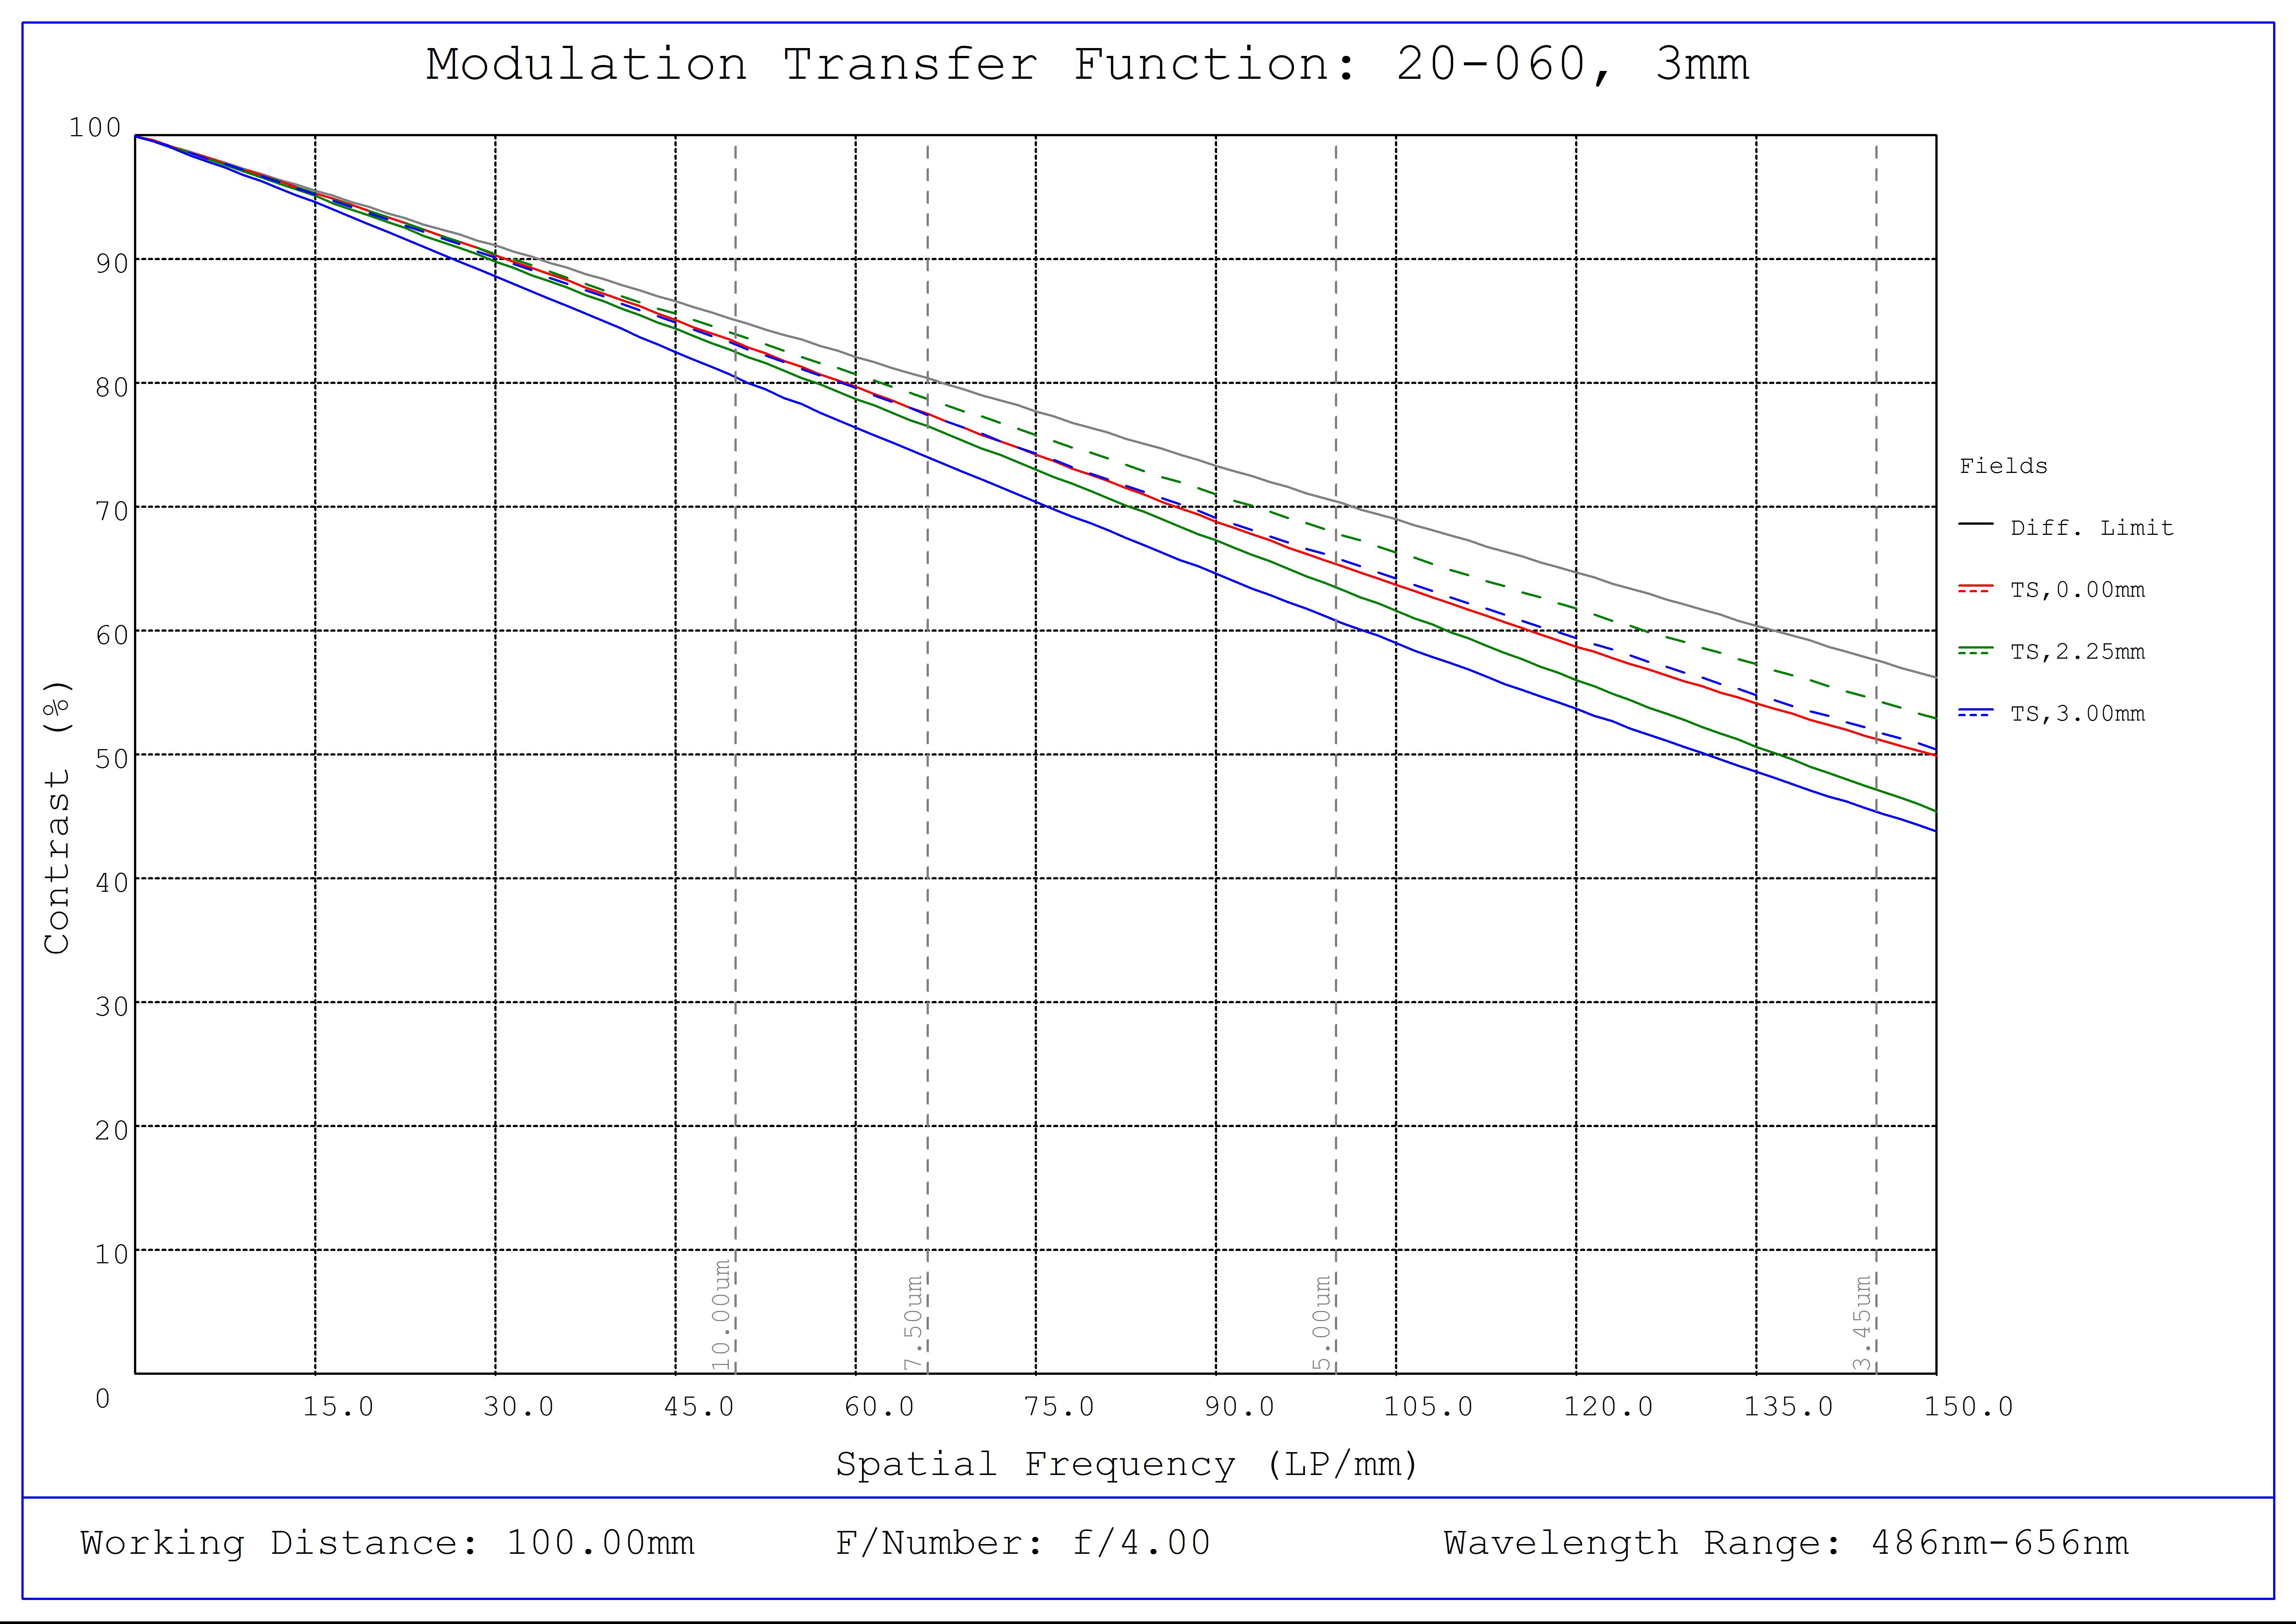 #20-060, 3mm FL f/4.0 IR-Cut Rugged Blue Series M12 Lens, Modulated Transfer Function (MTF) Plot, 100mm Working Distance, f4